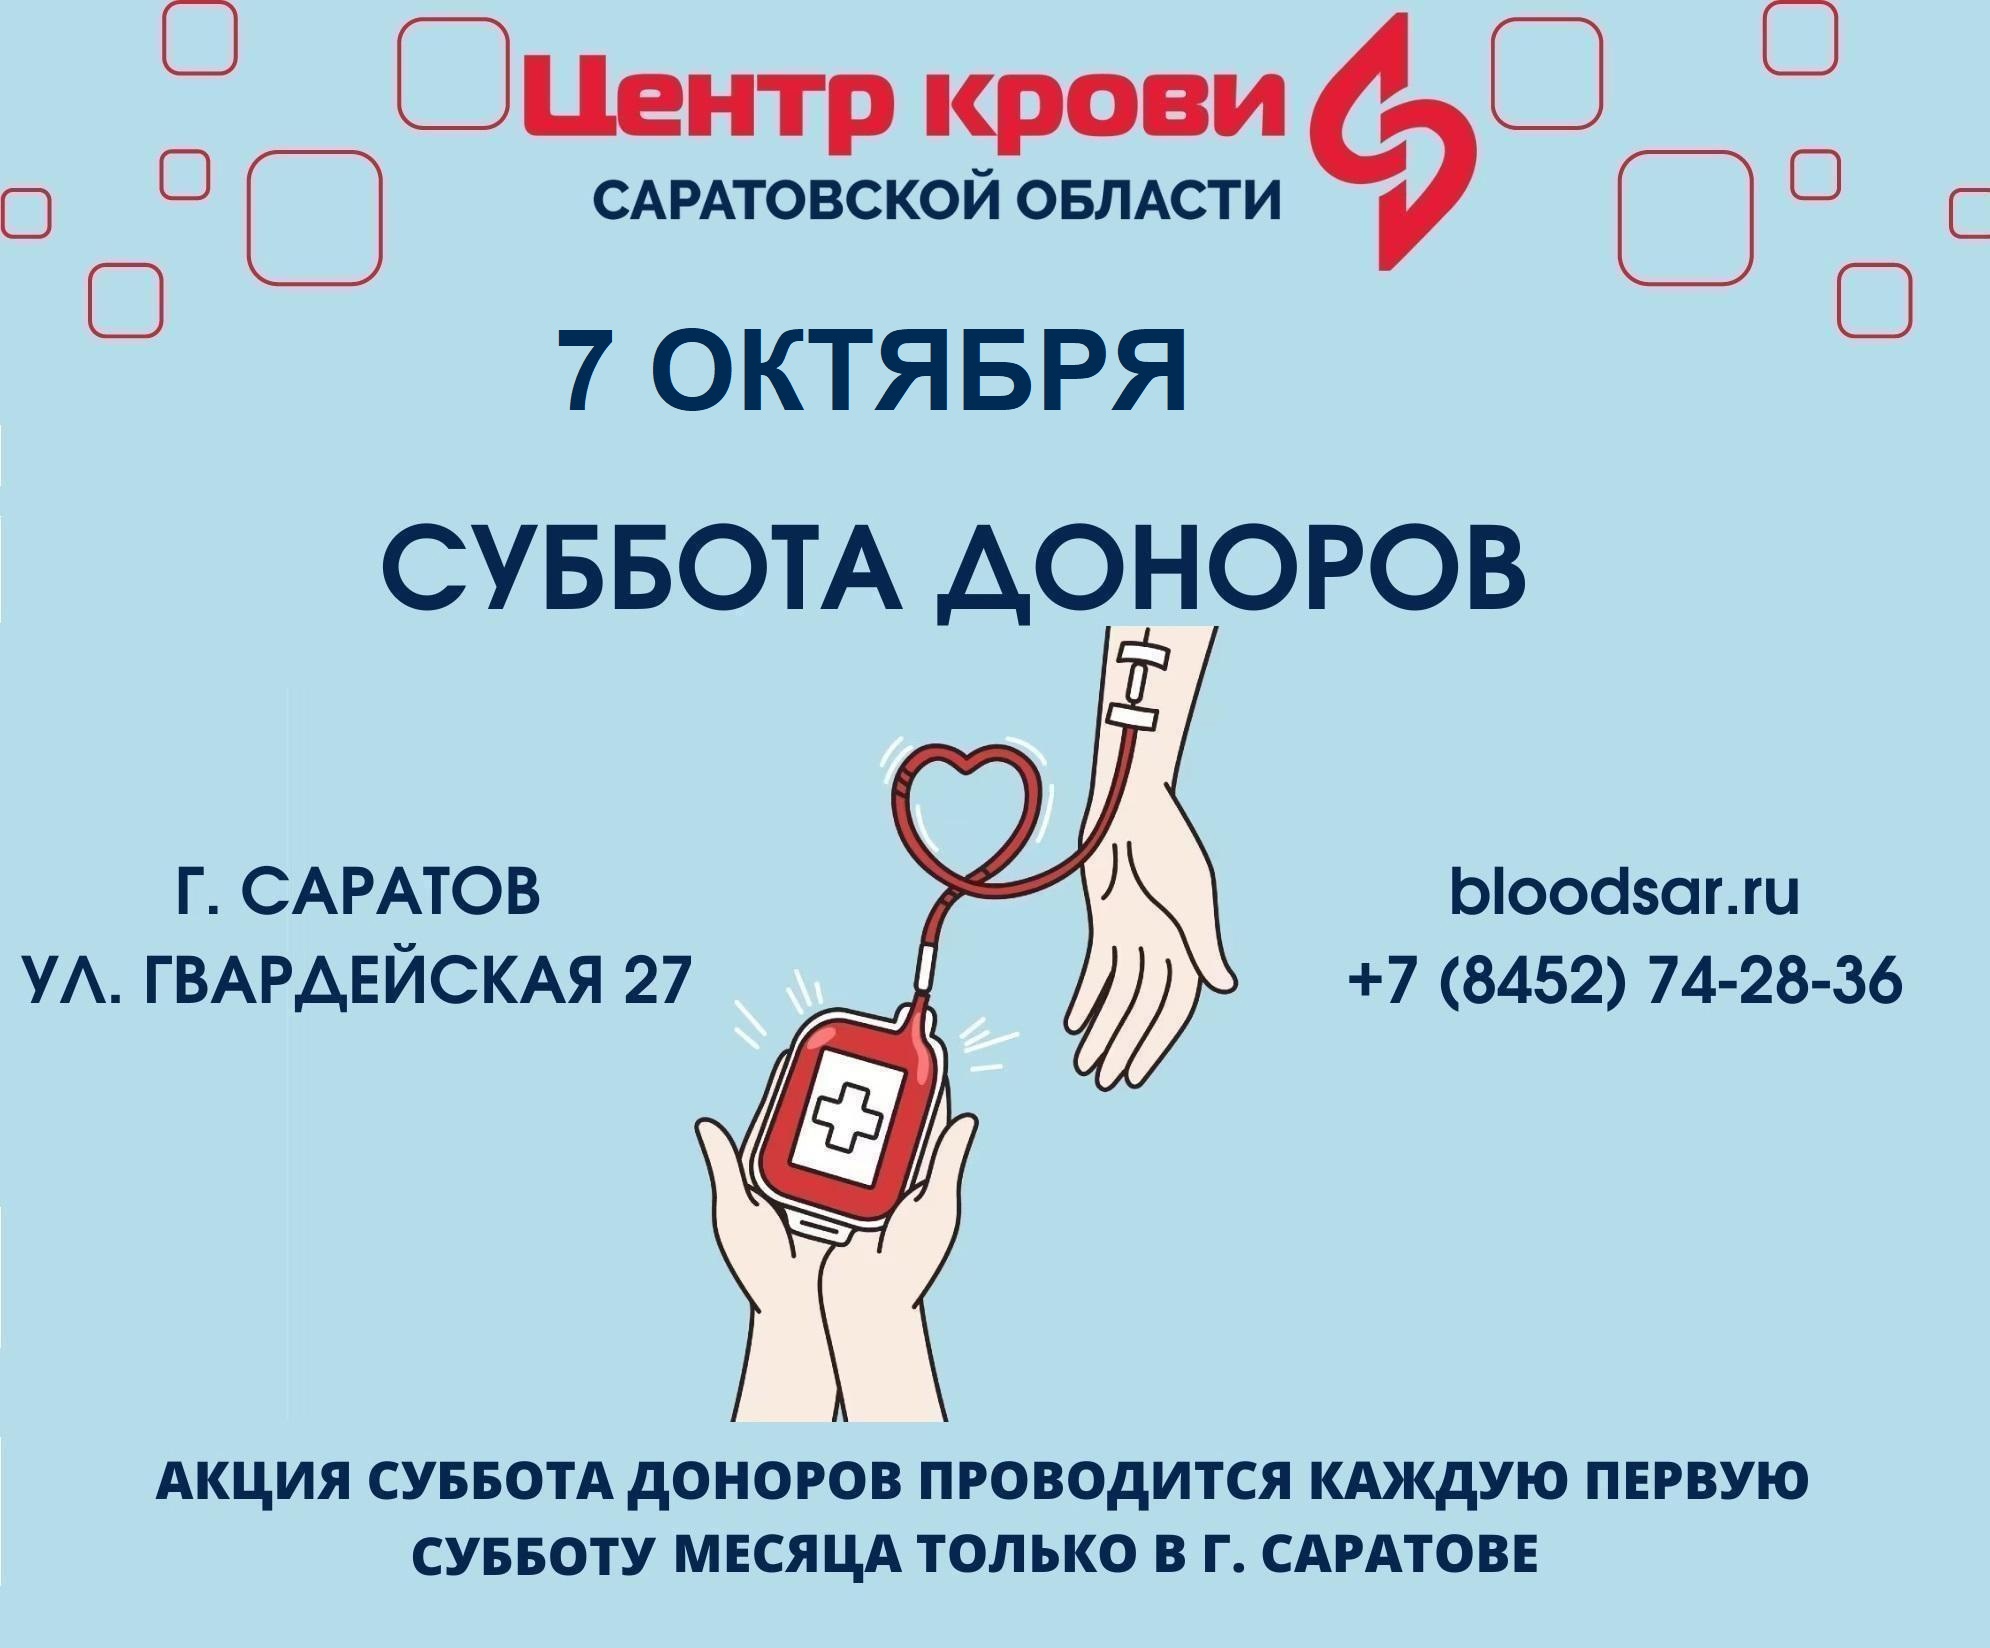 Суббота доноров. Донорство крови. Донорский центр Саратов. Суббота донора картинки. Плакат донорская суббота.